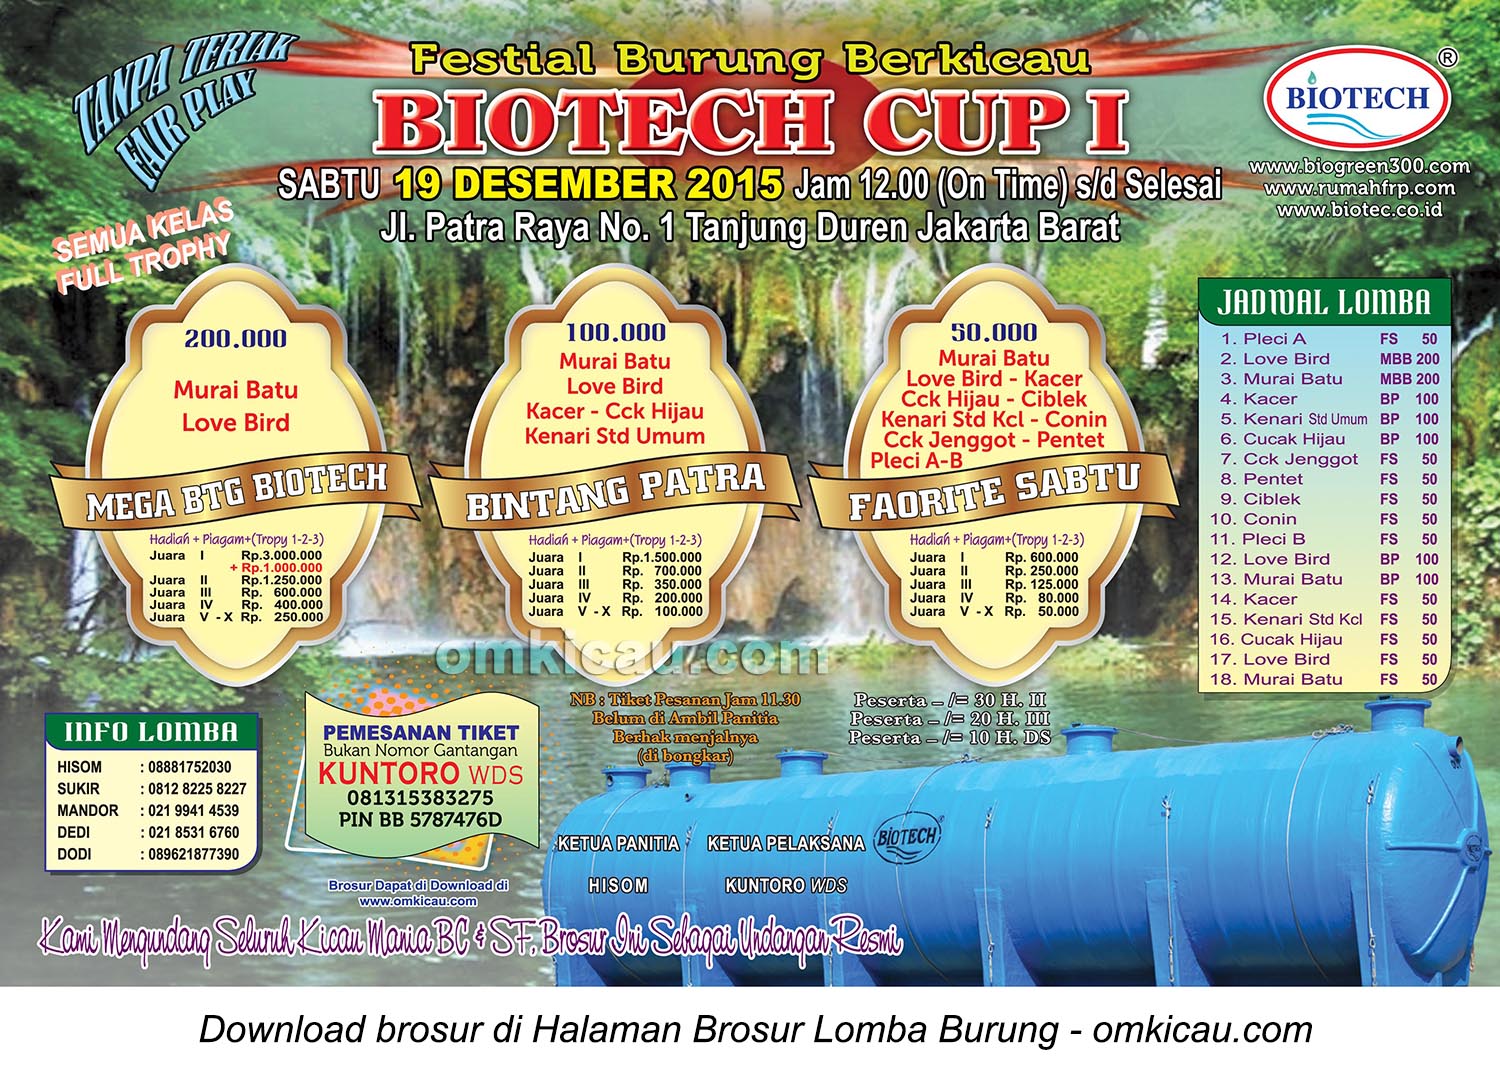 Brosur Lomba Burung Berkicau Biotech Cup 1, Jakarta Barat, 19 Desember 2015